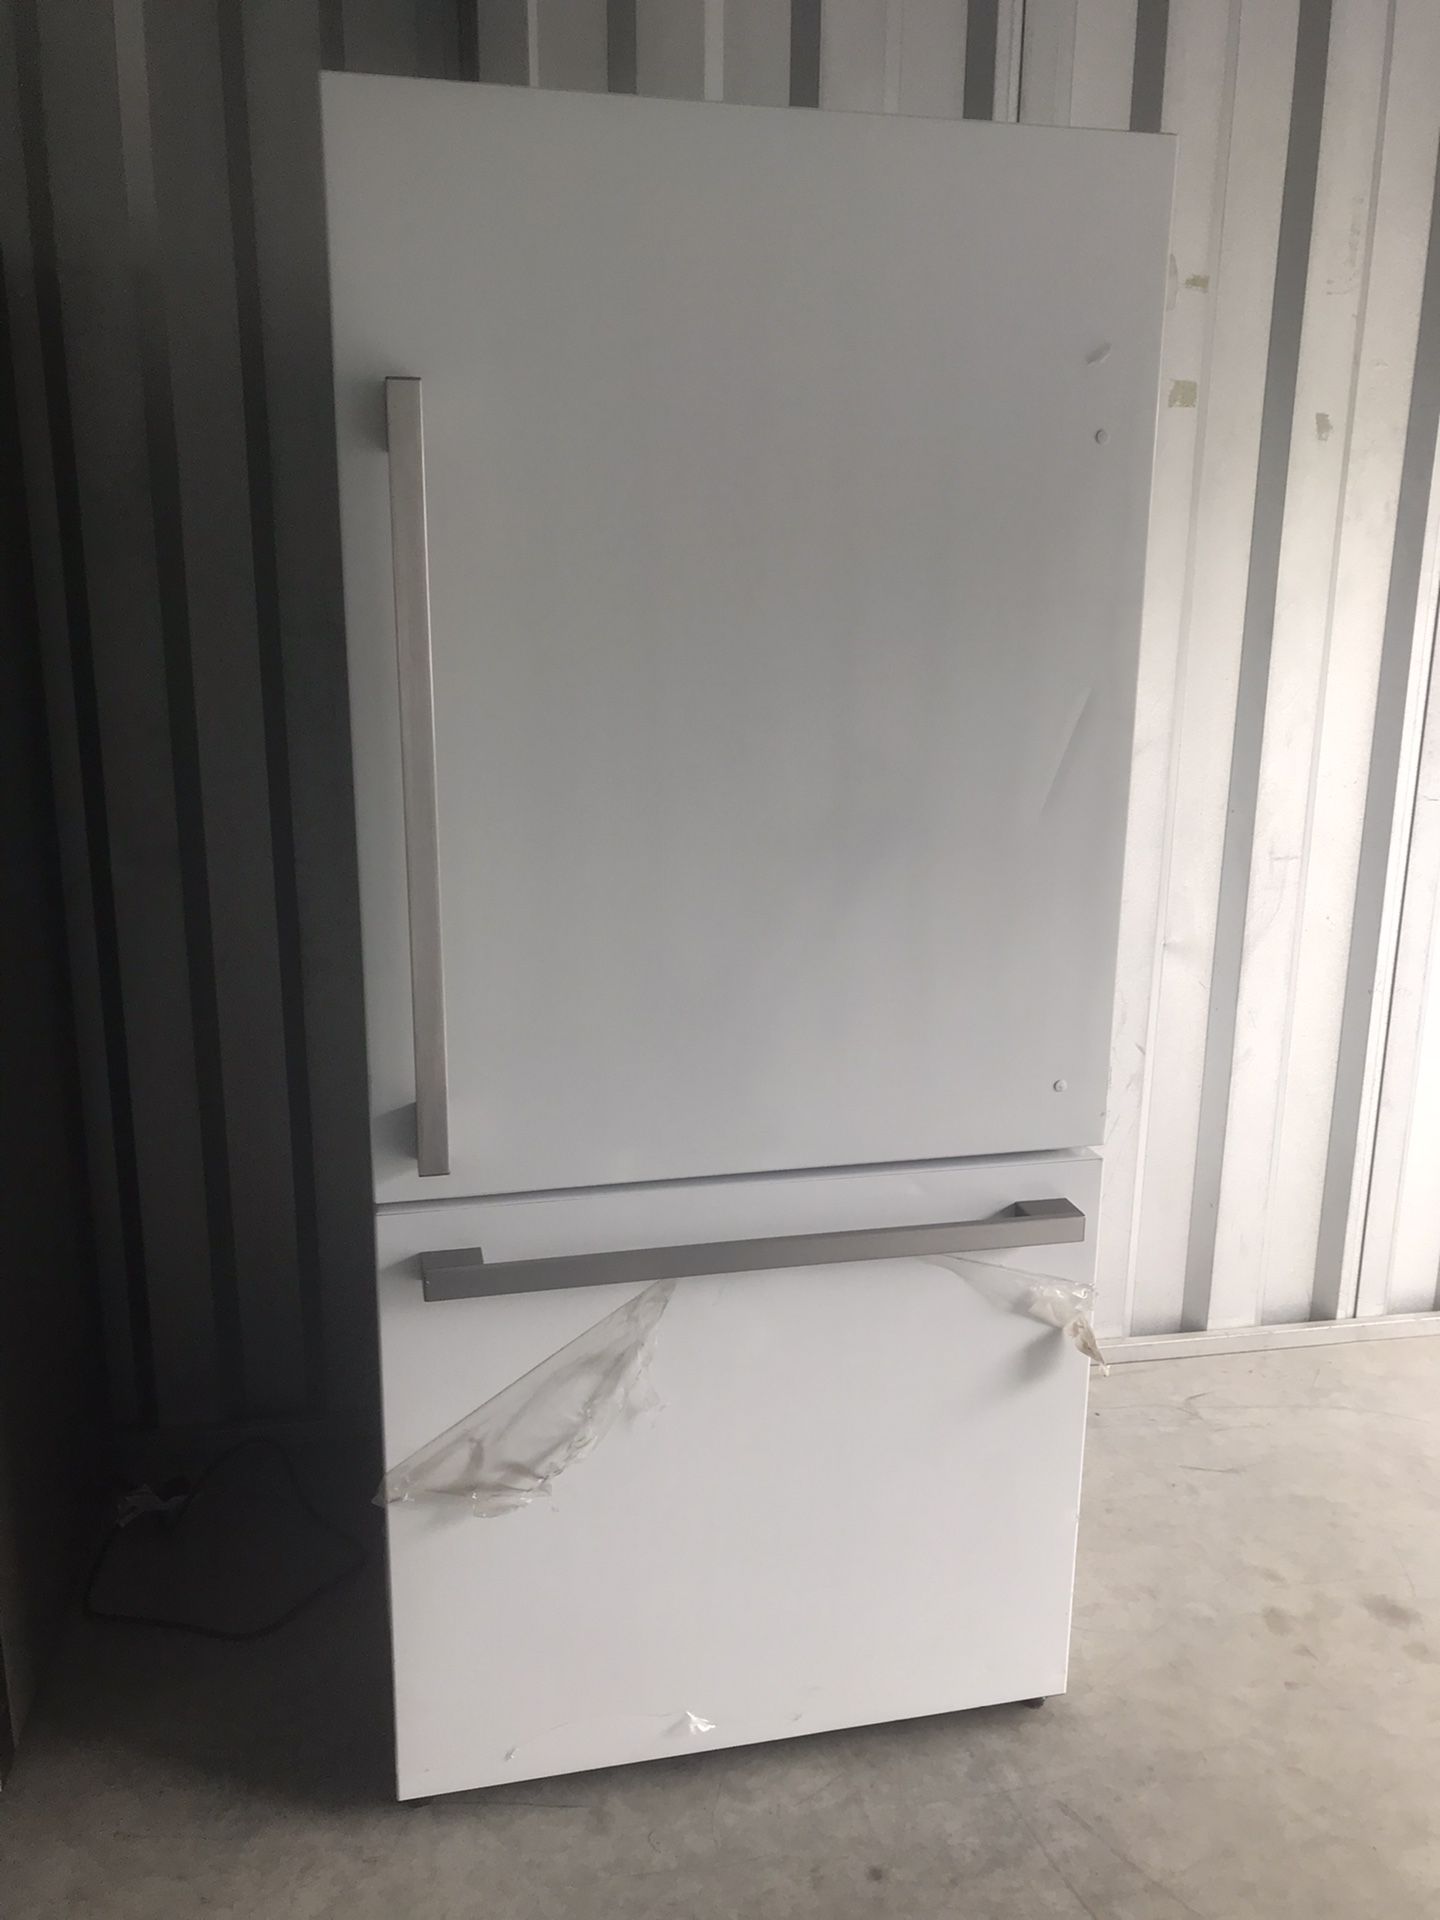 Brand New Scratch And Dent White Refrigerator 